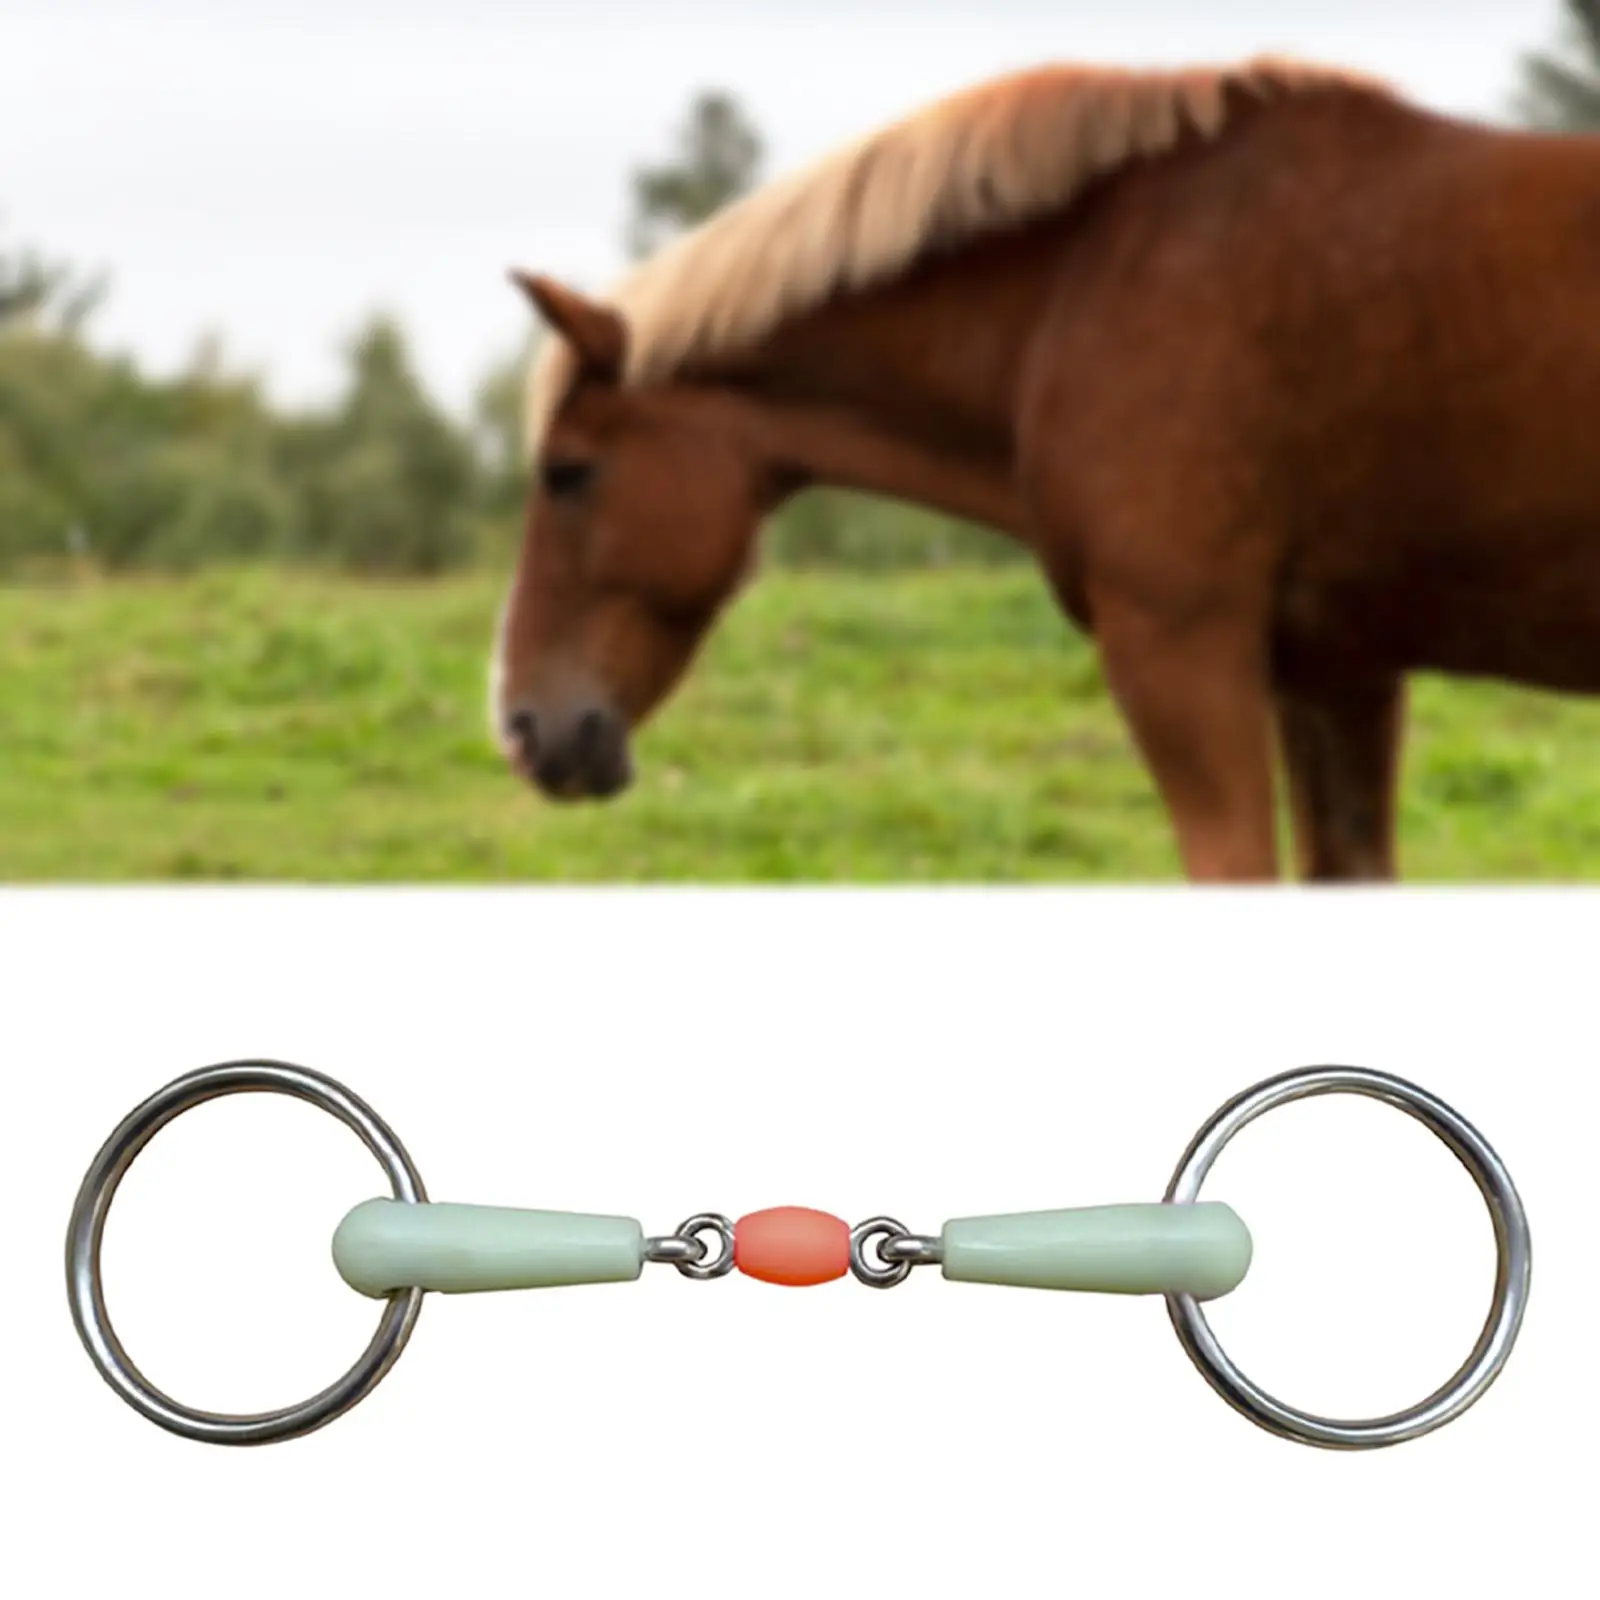 horse Mouth Bit Flavor Horse Bit Supplies Snaffle Bits Round Link for Equipment Performance Equestrian Training Cheek